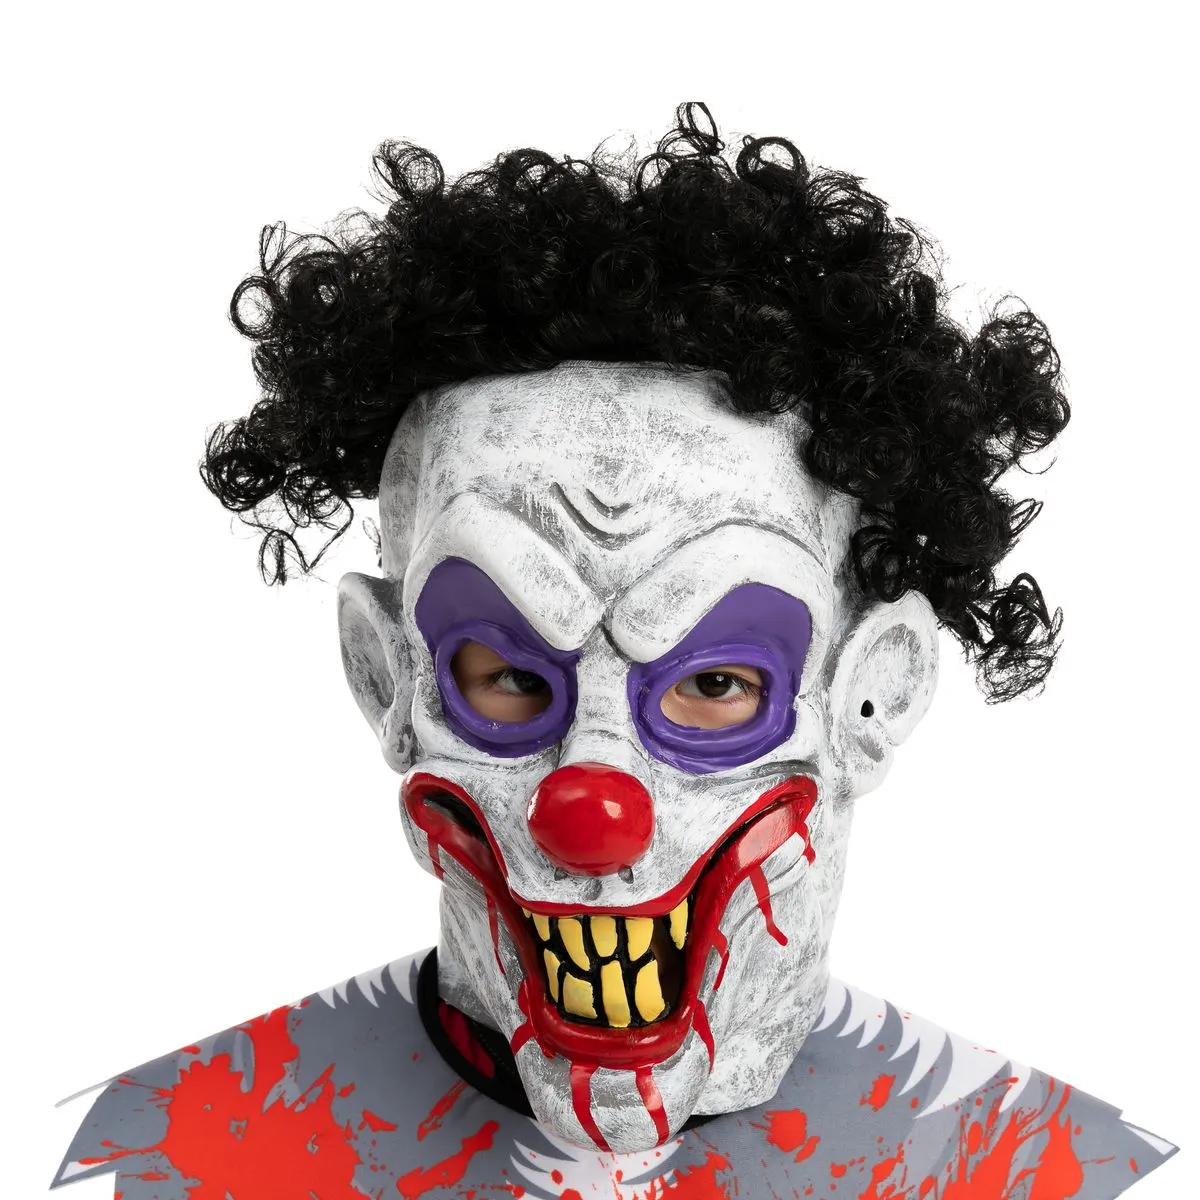 Child Killer Clown Costume